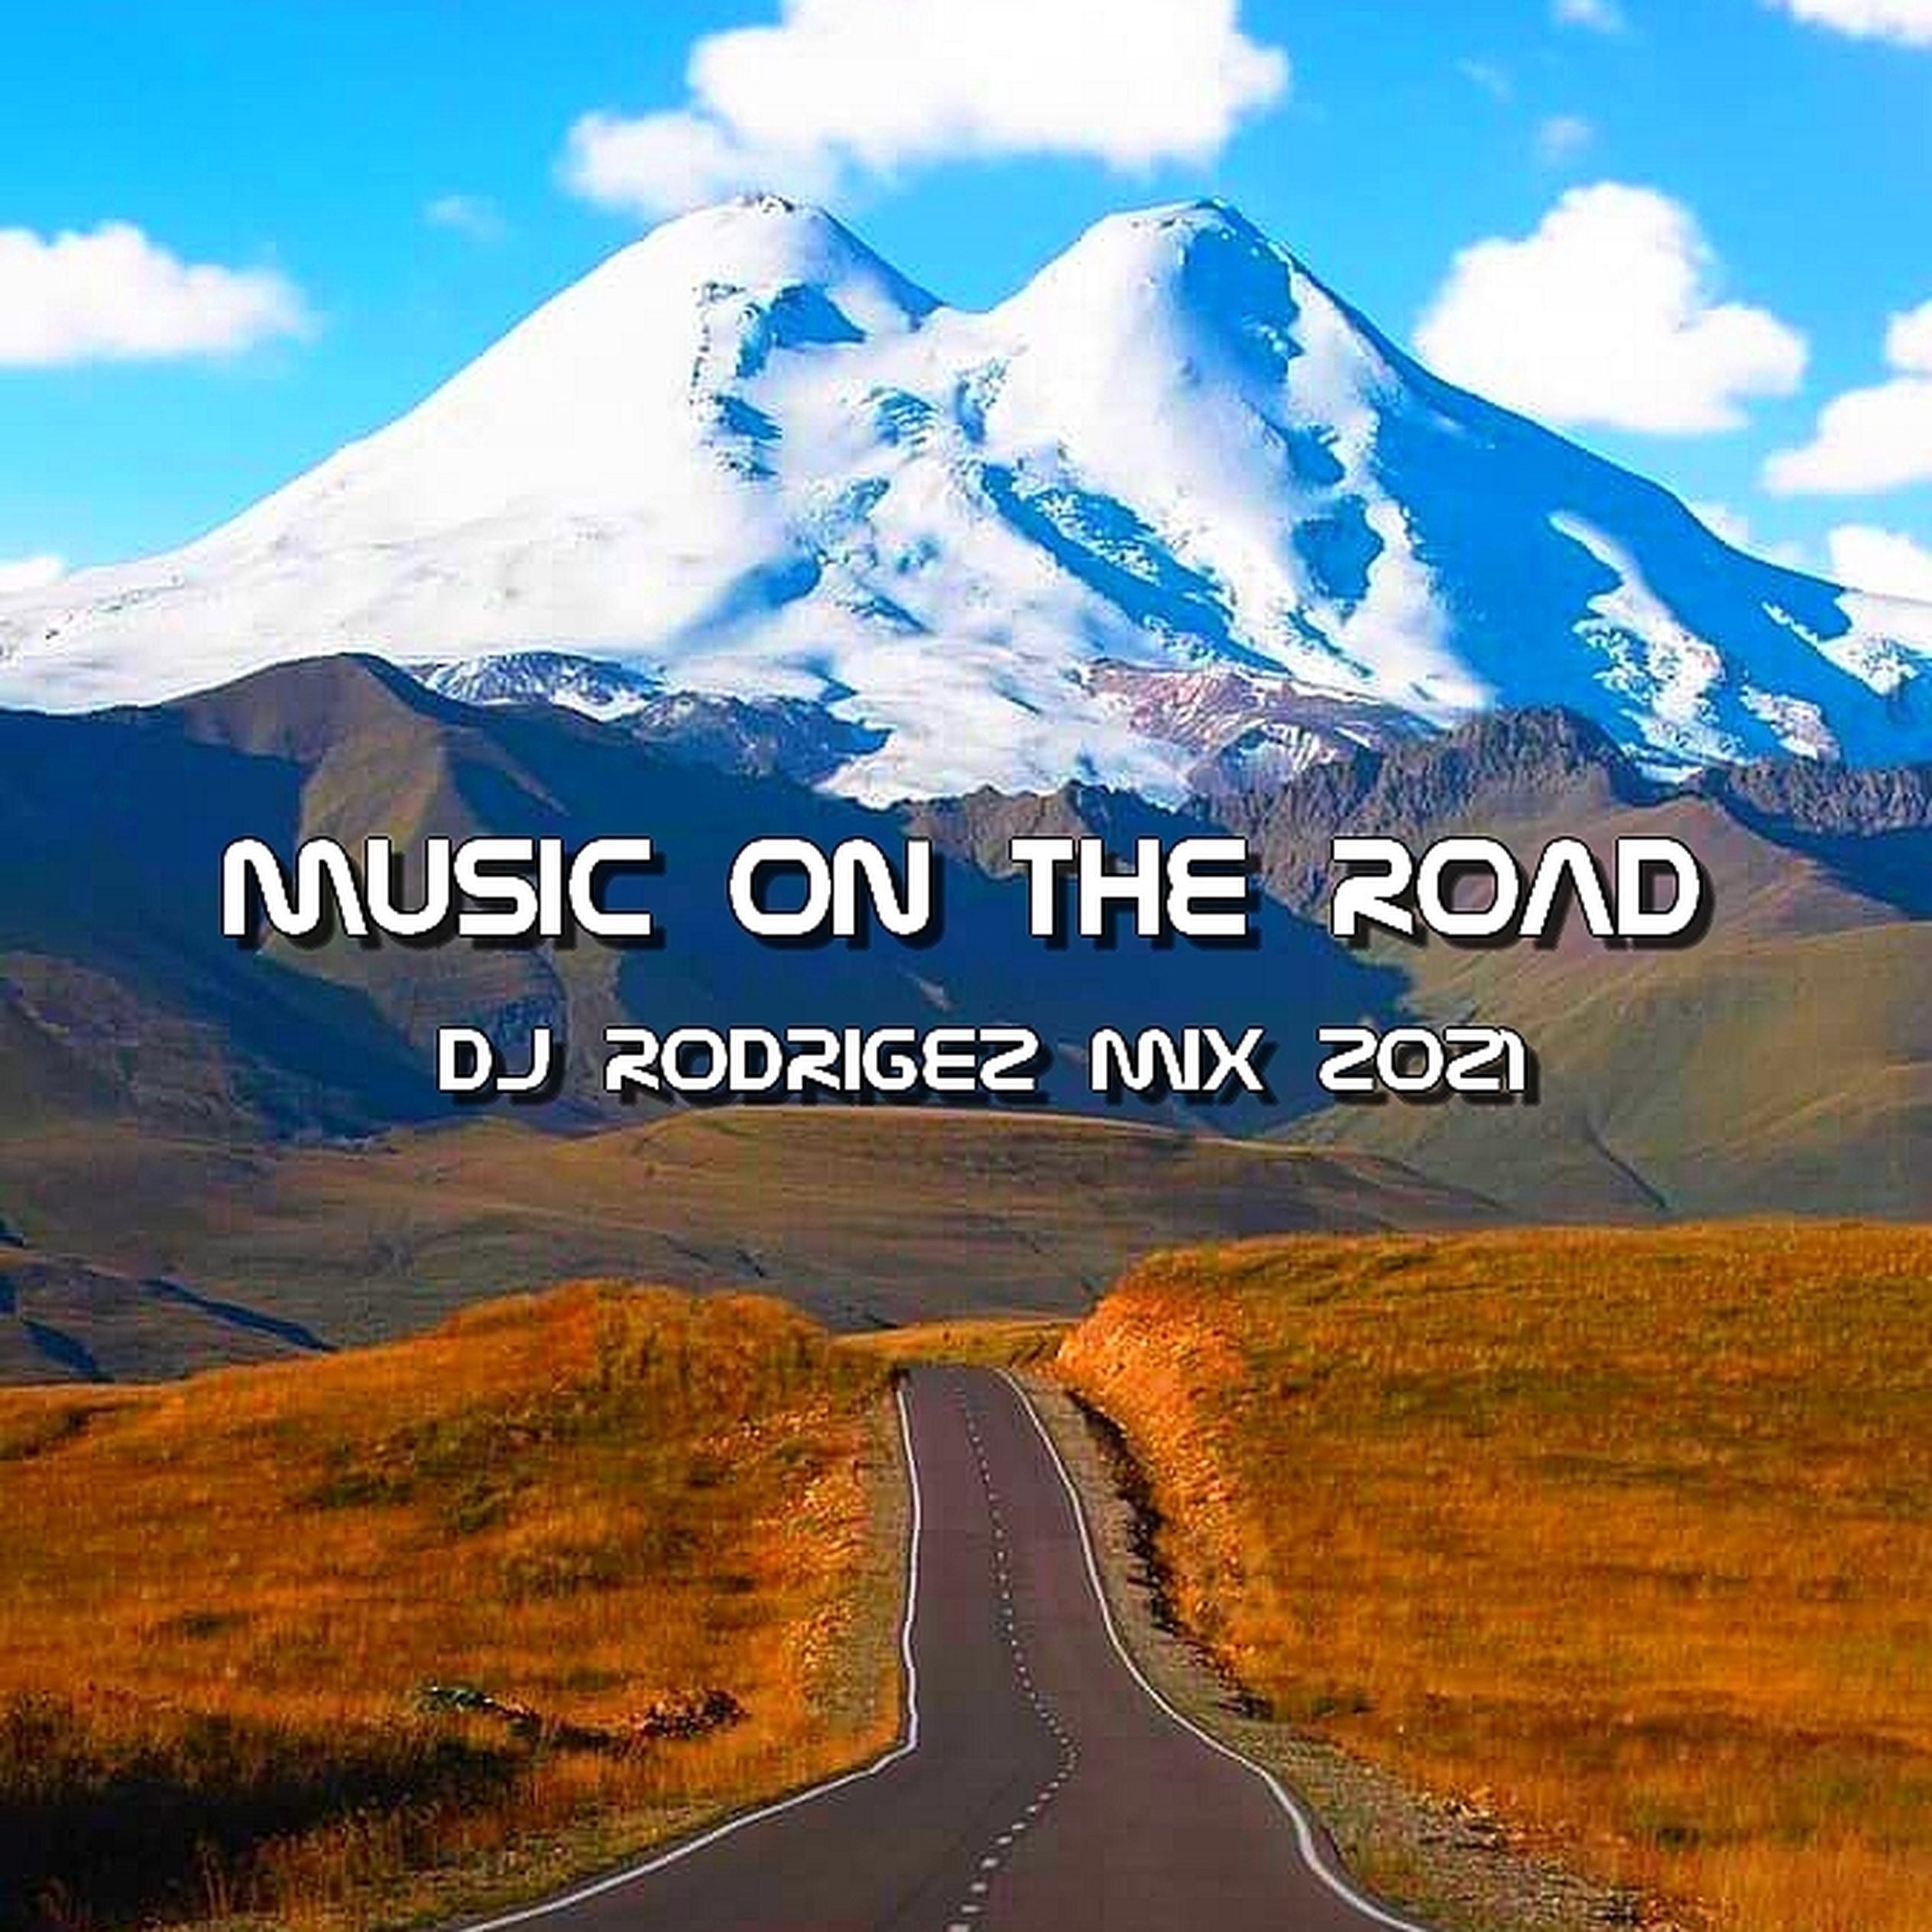 Та музыка дорог. Music for the Road. Music в дорогу. End of the Road DJ Antonio feat. Aris обложка.